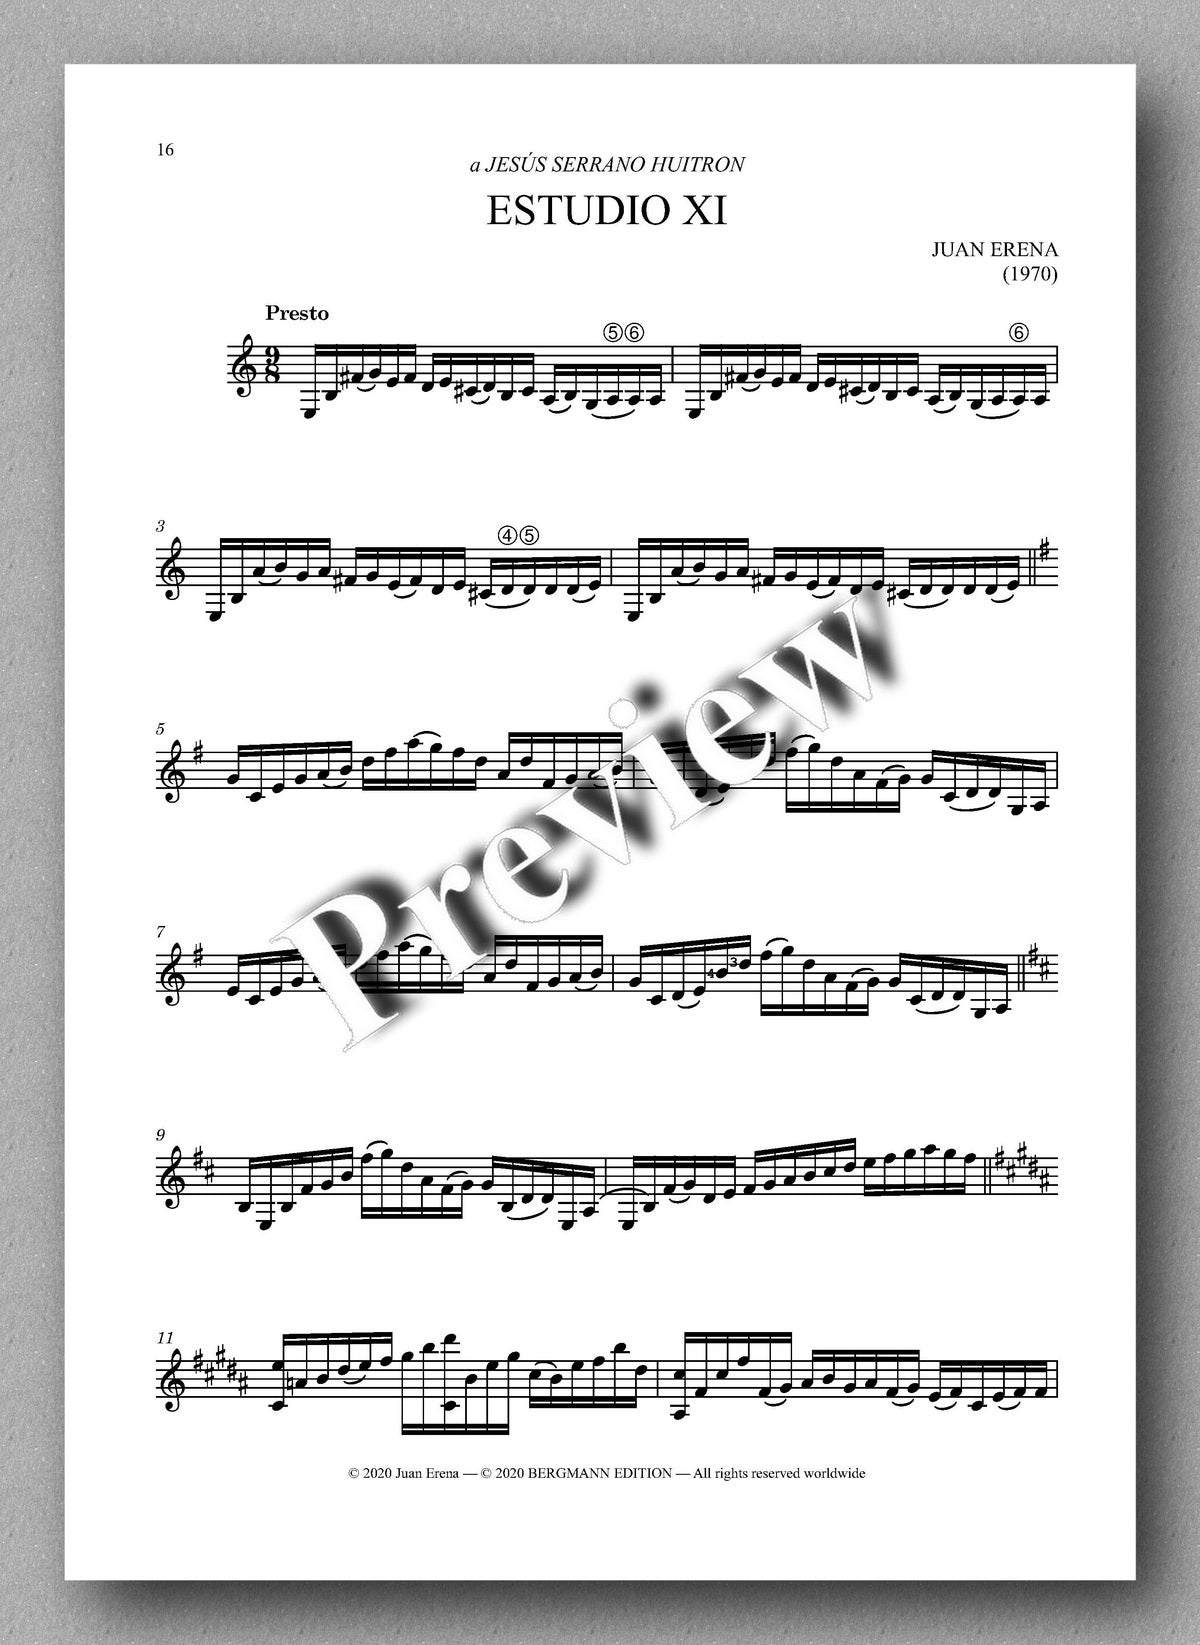 Juan Erena, ESTUDIOS I-XII  - music score 2